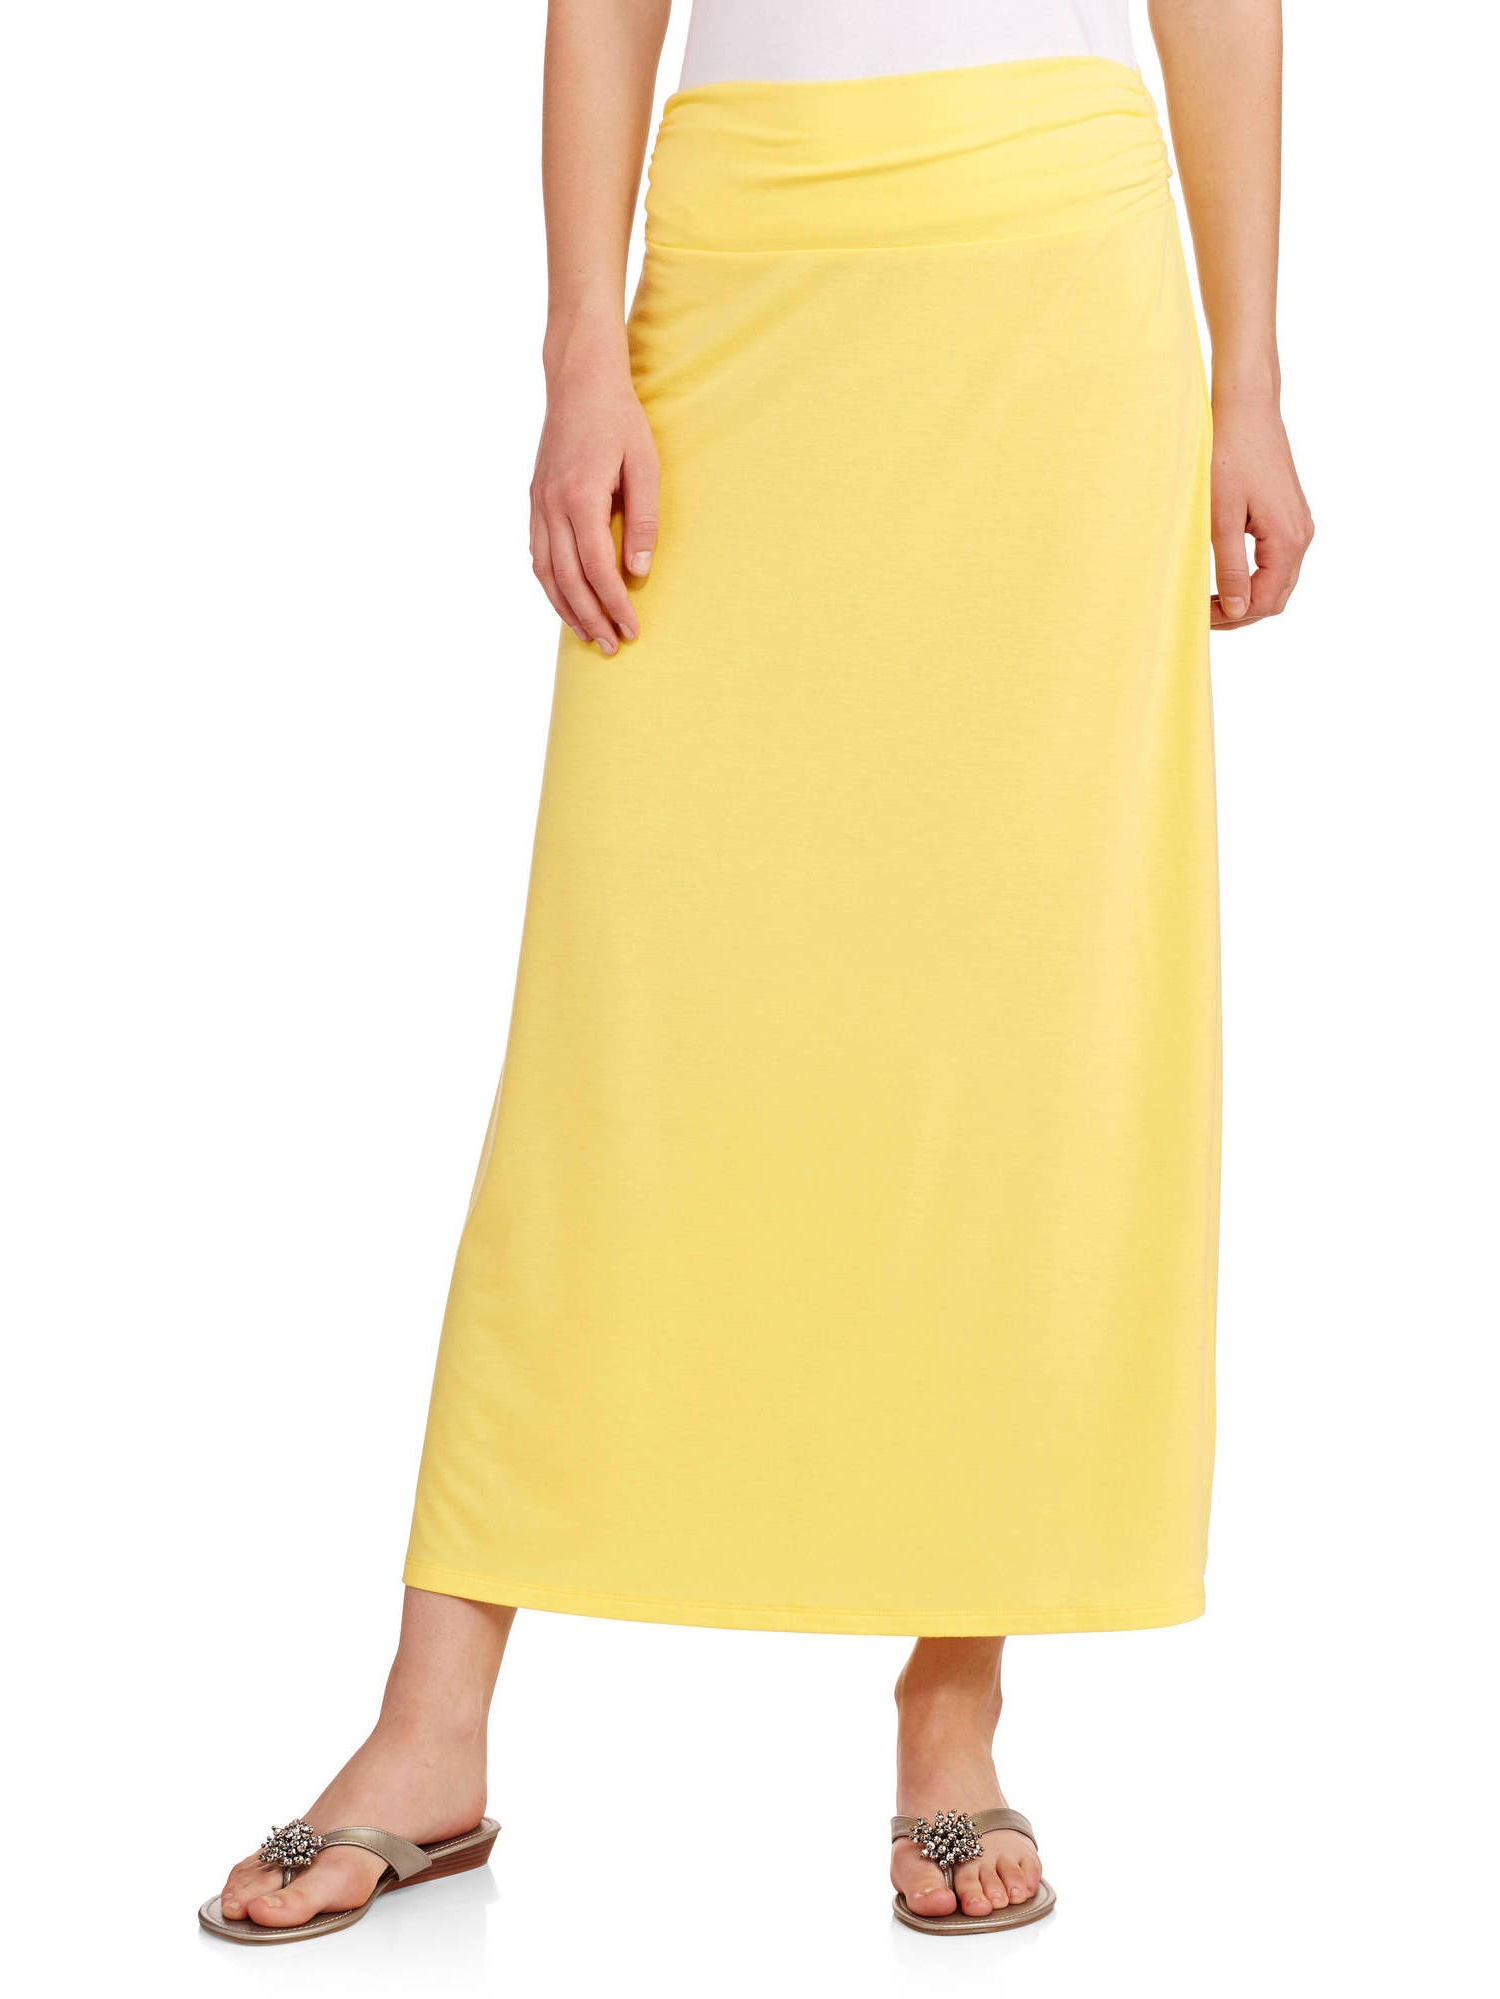 Women's Fashion Maxi Skirt with Shirred Waistband - image 1 of 2